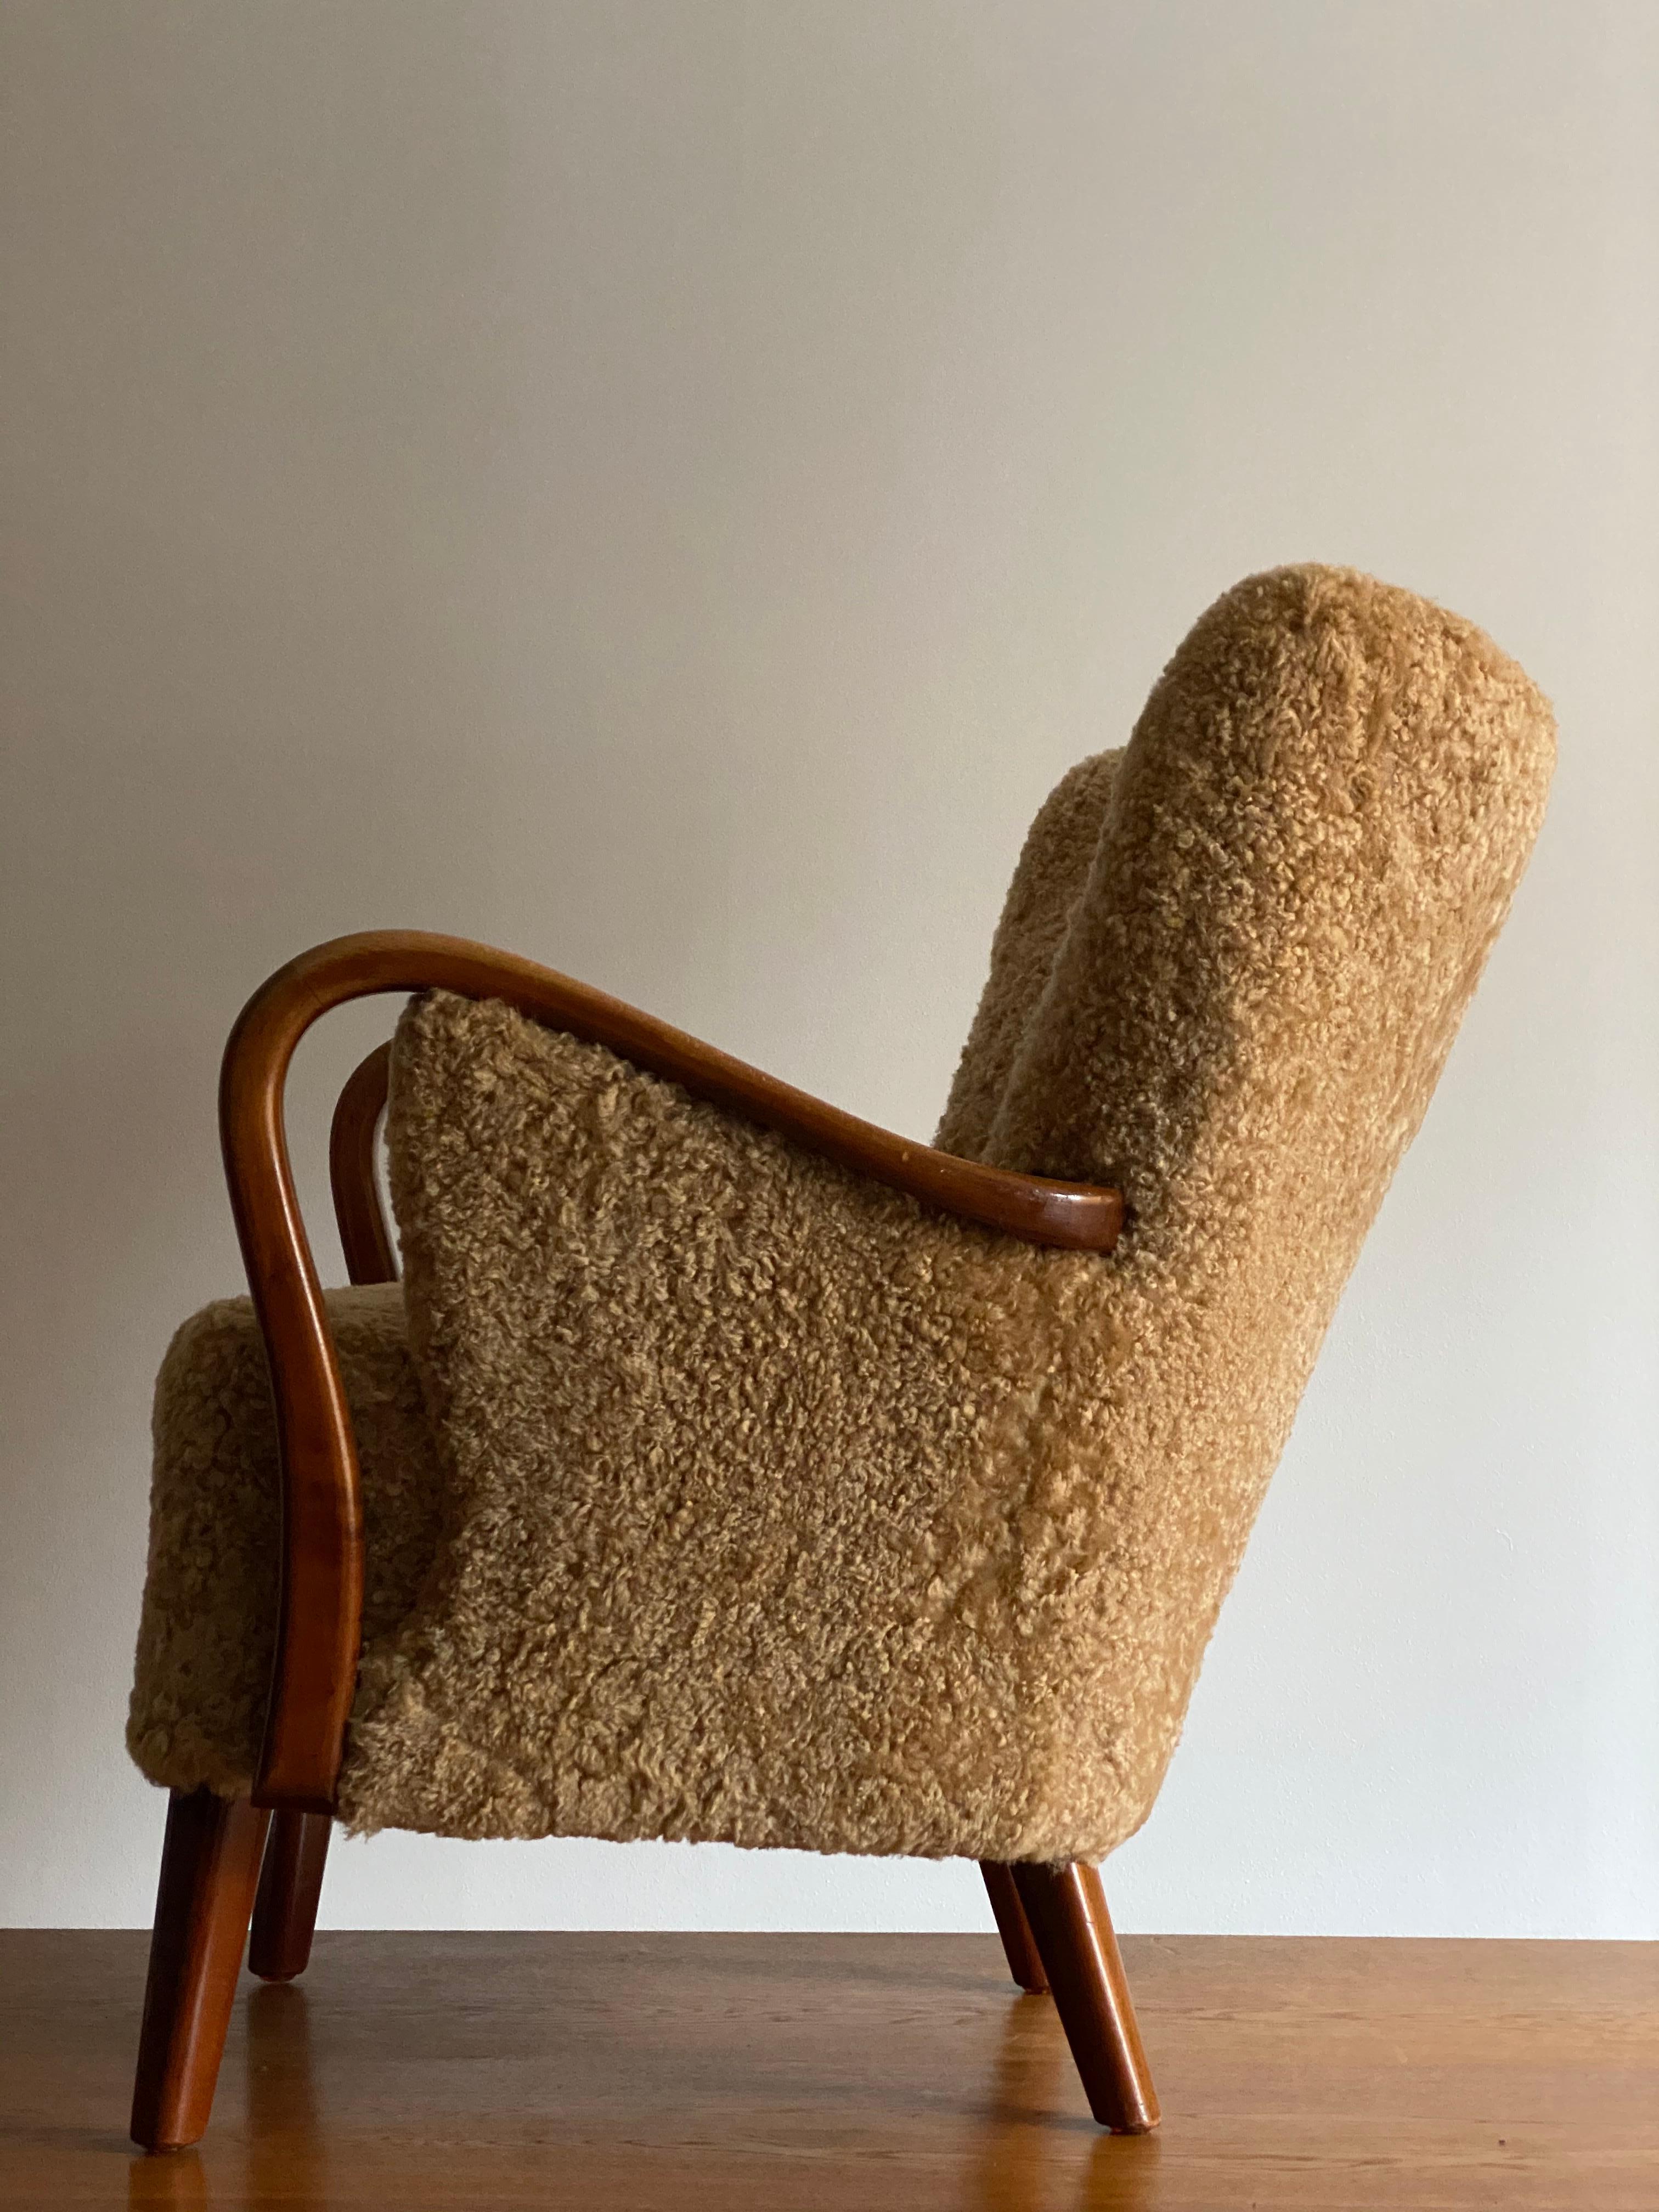 shearling chair